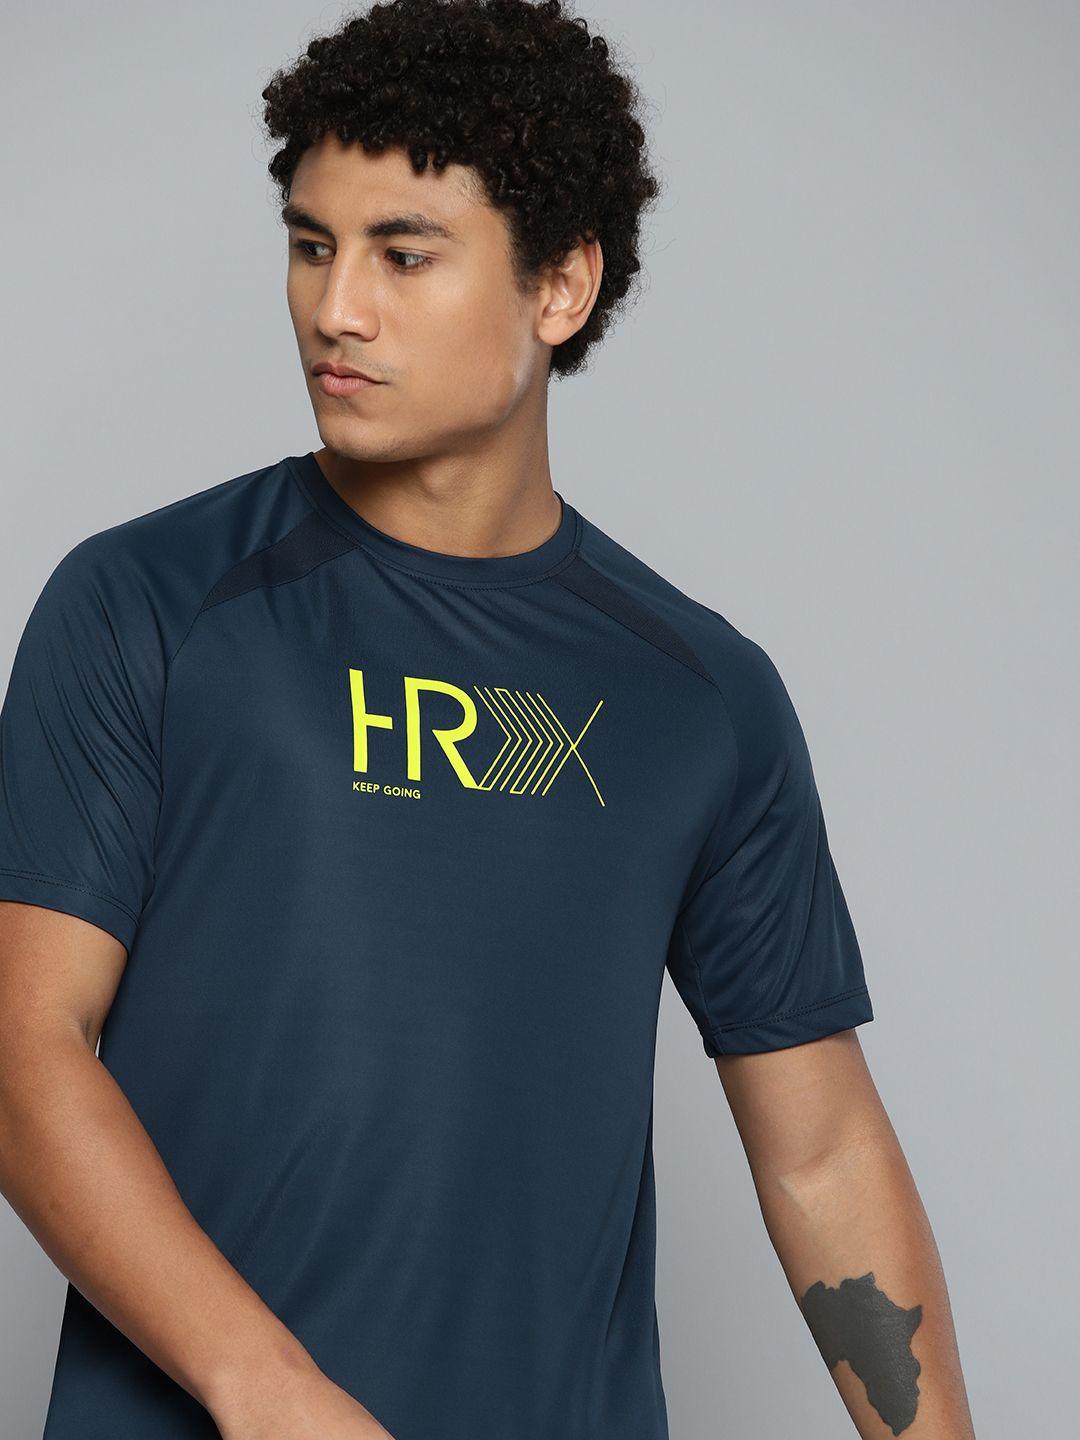 hrx by hrithik roshan men navy blue & yellow brand logo printed t-shirt